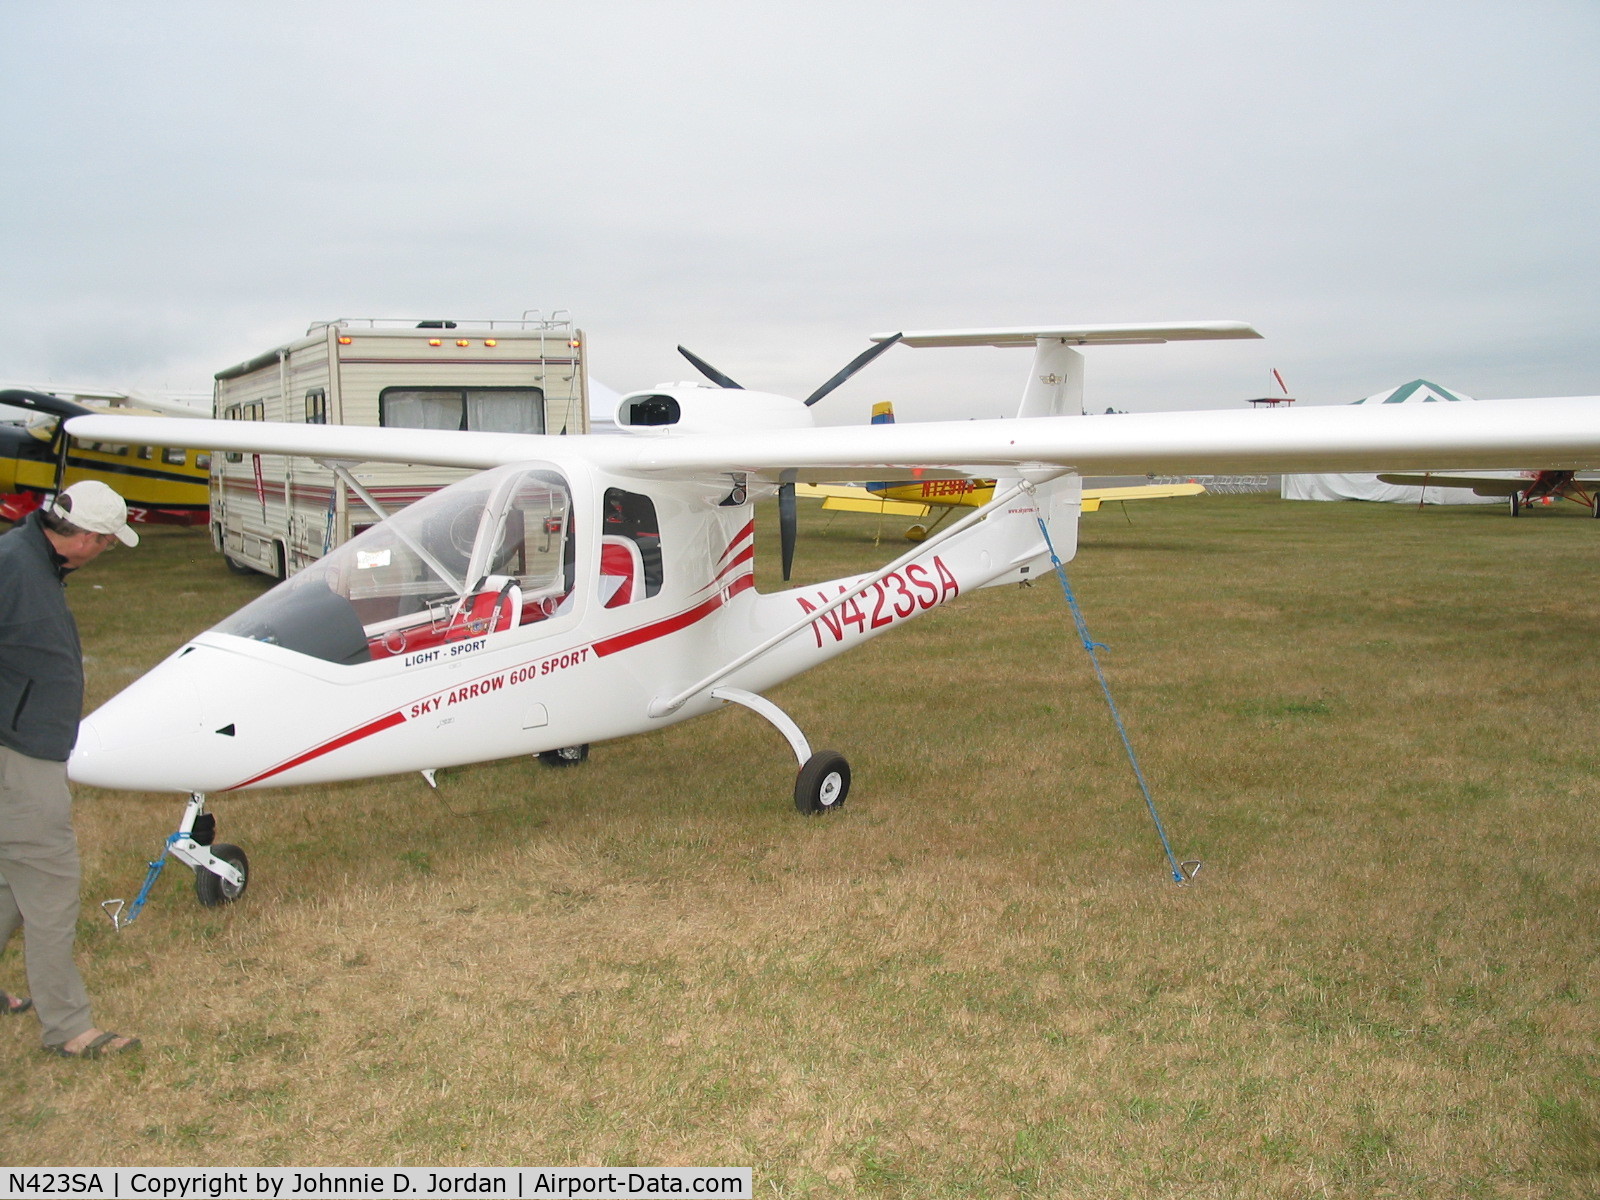 N423SA, 2006 Iniziative Industriali Italiane Sky Arrow 600 Sport C/N LSA003, Taken at EAA Fly-In Arlington, Wa. 2006